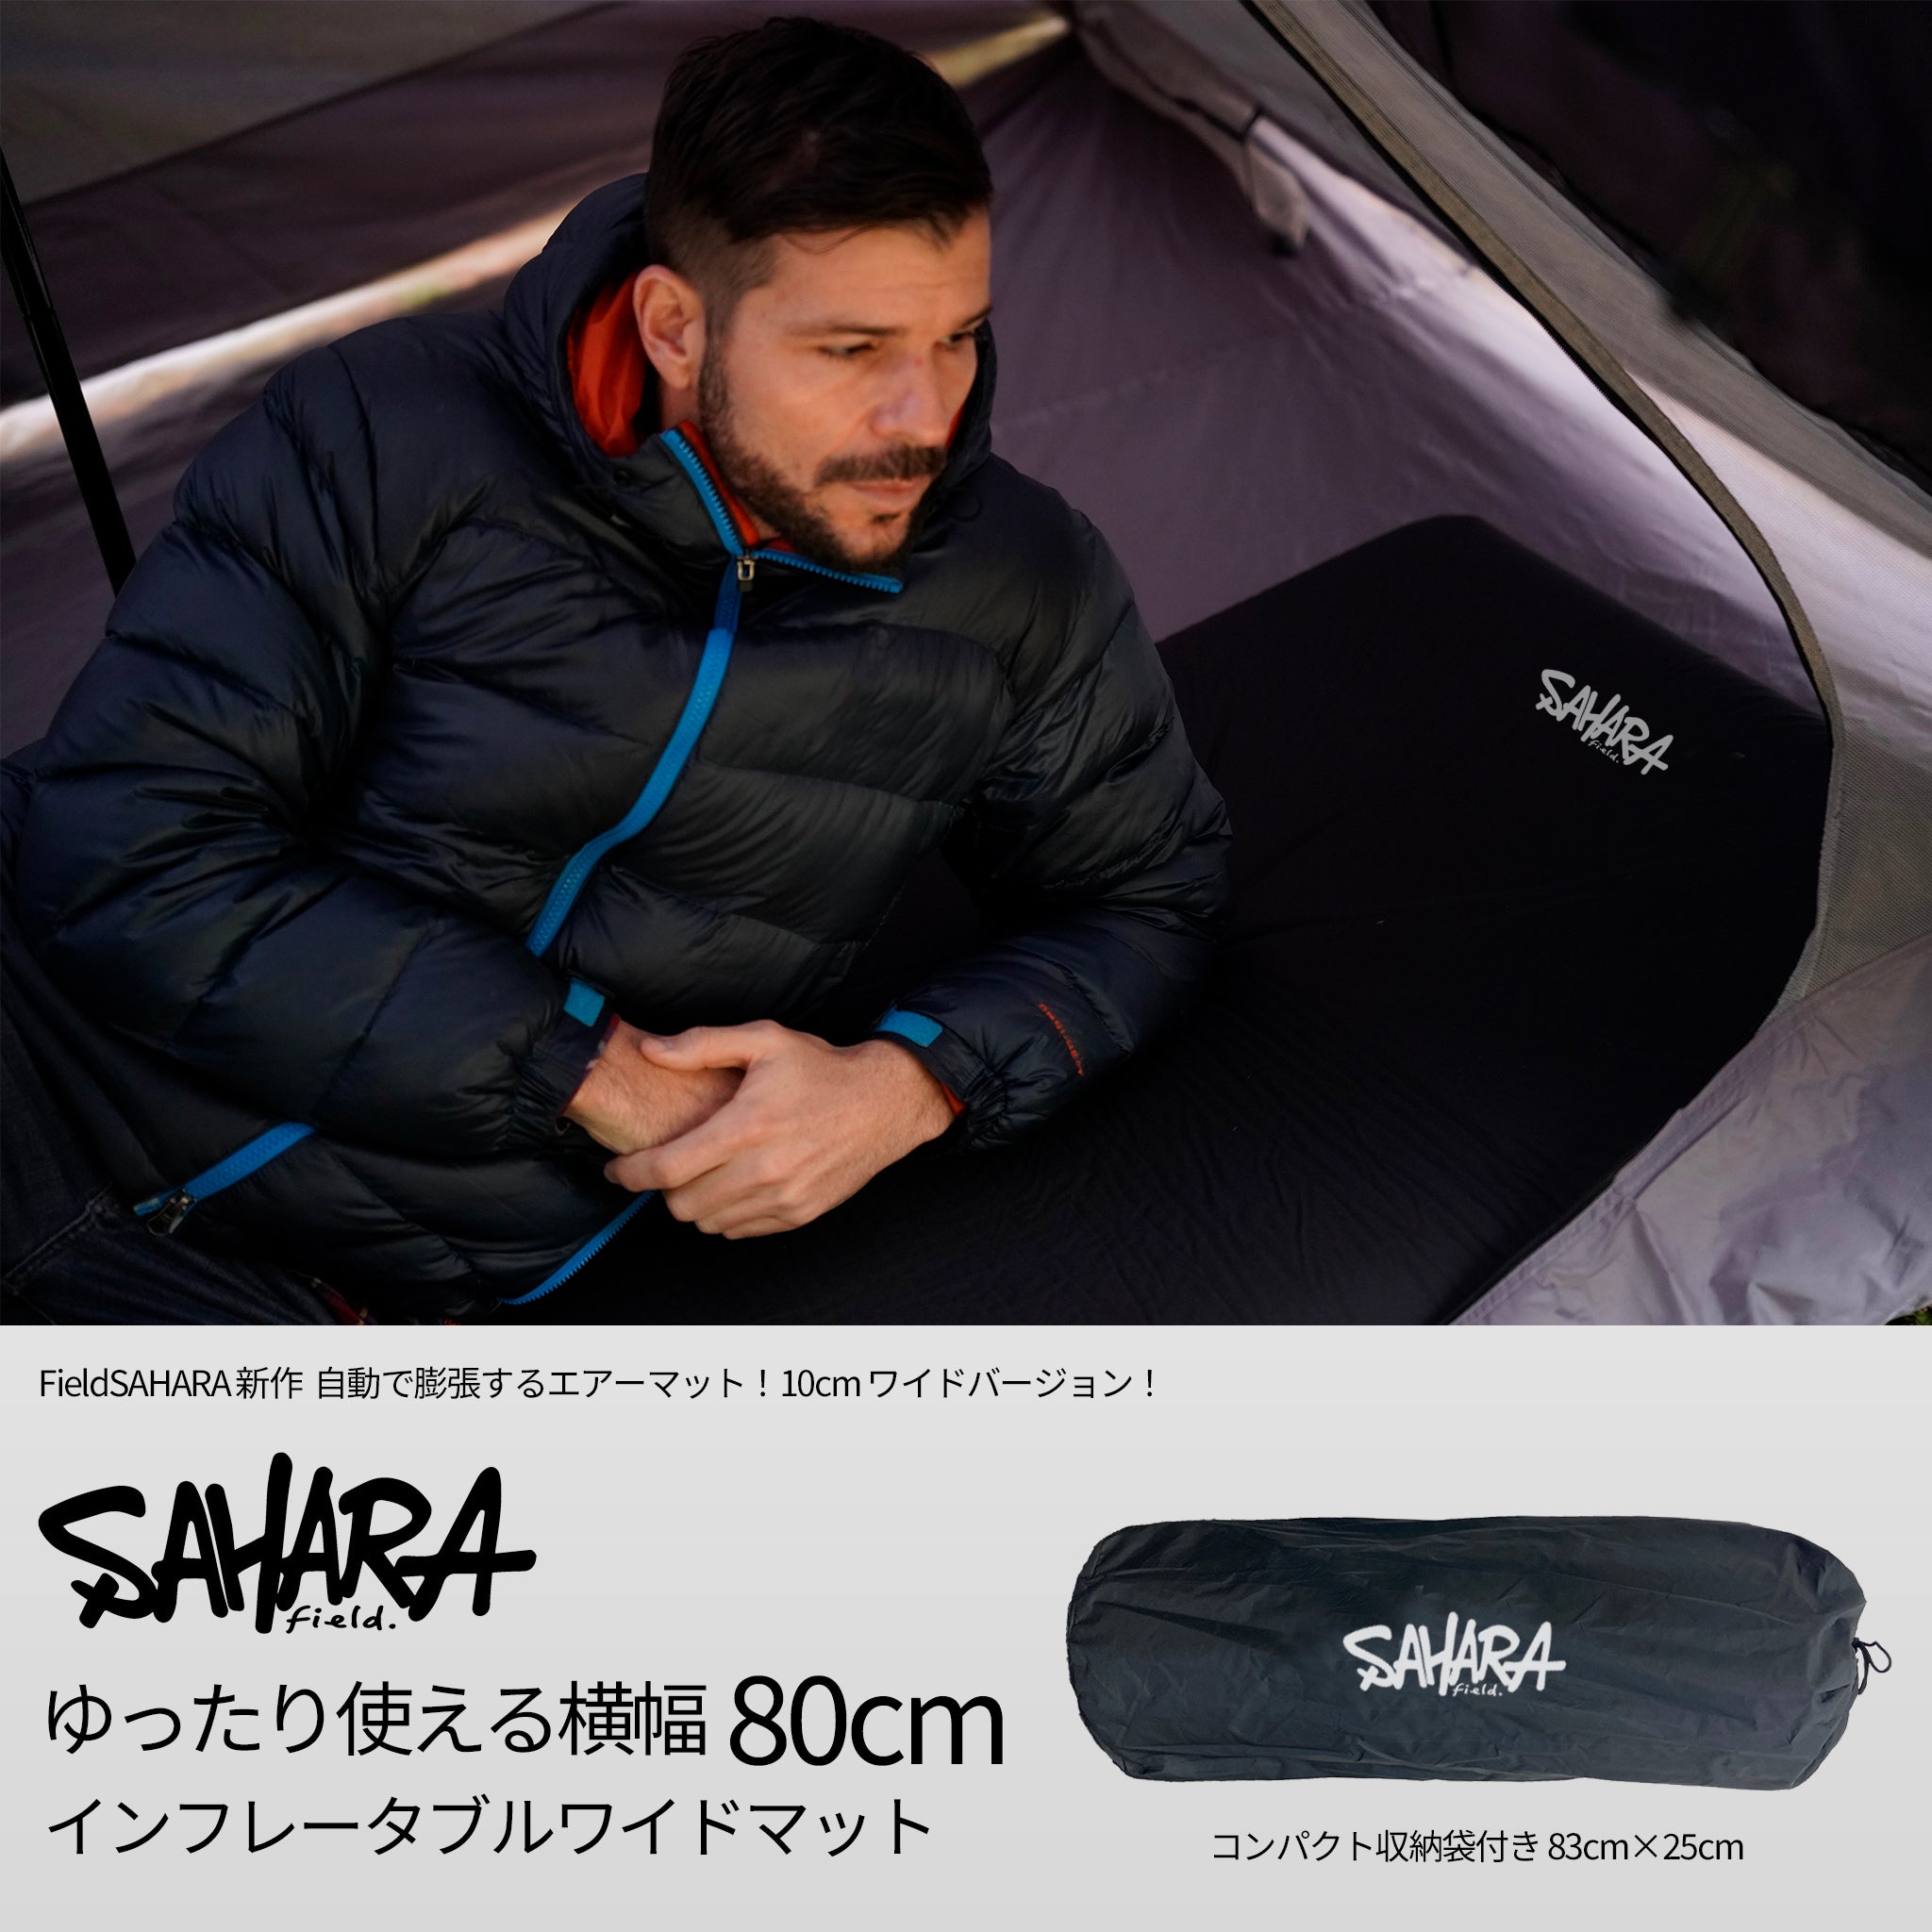 FieldSAHARA ZW3000 封筒型 枕付き ワイド 限界使用温度 -30℃ ダウン